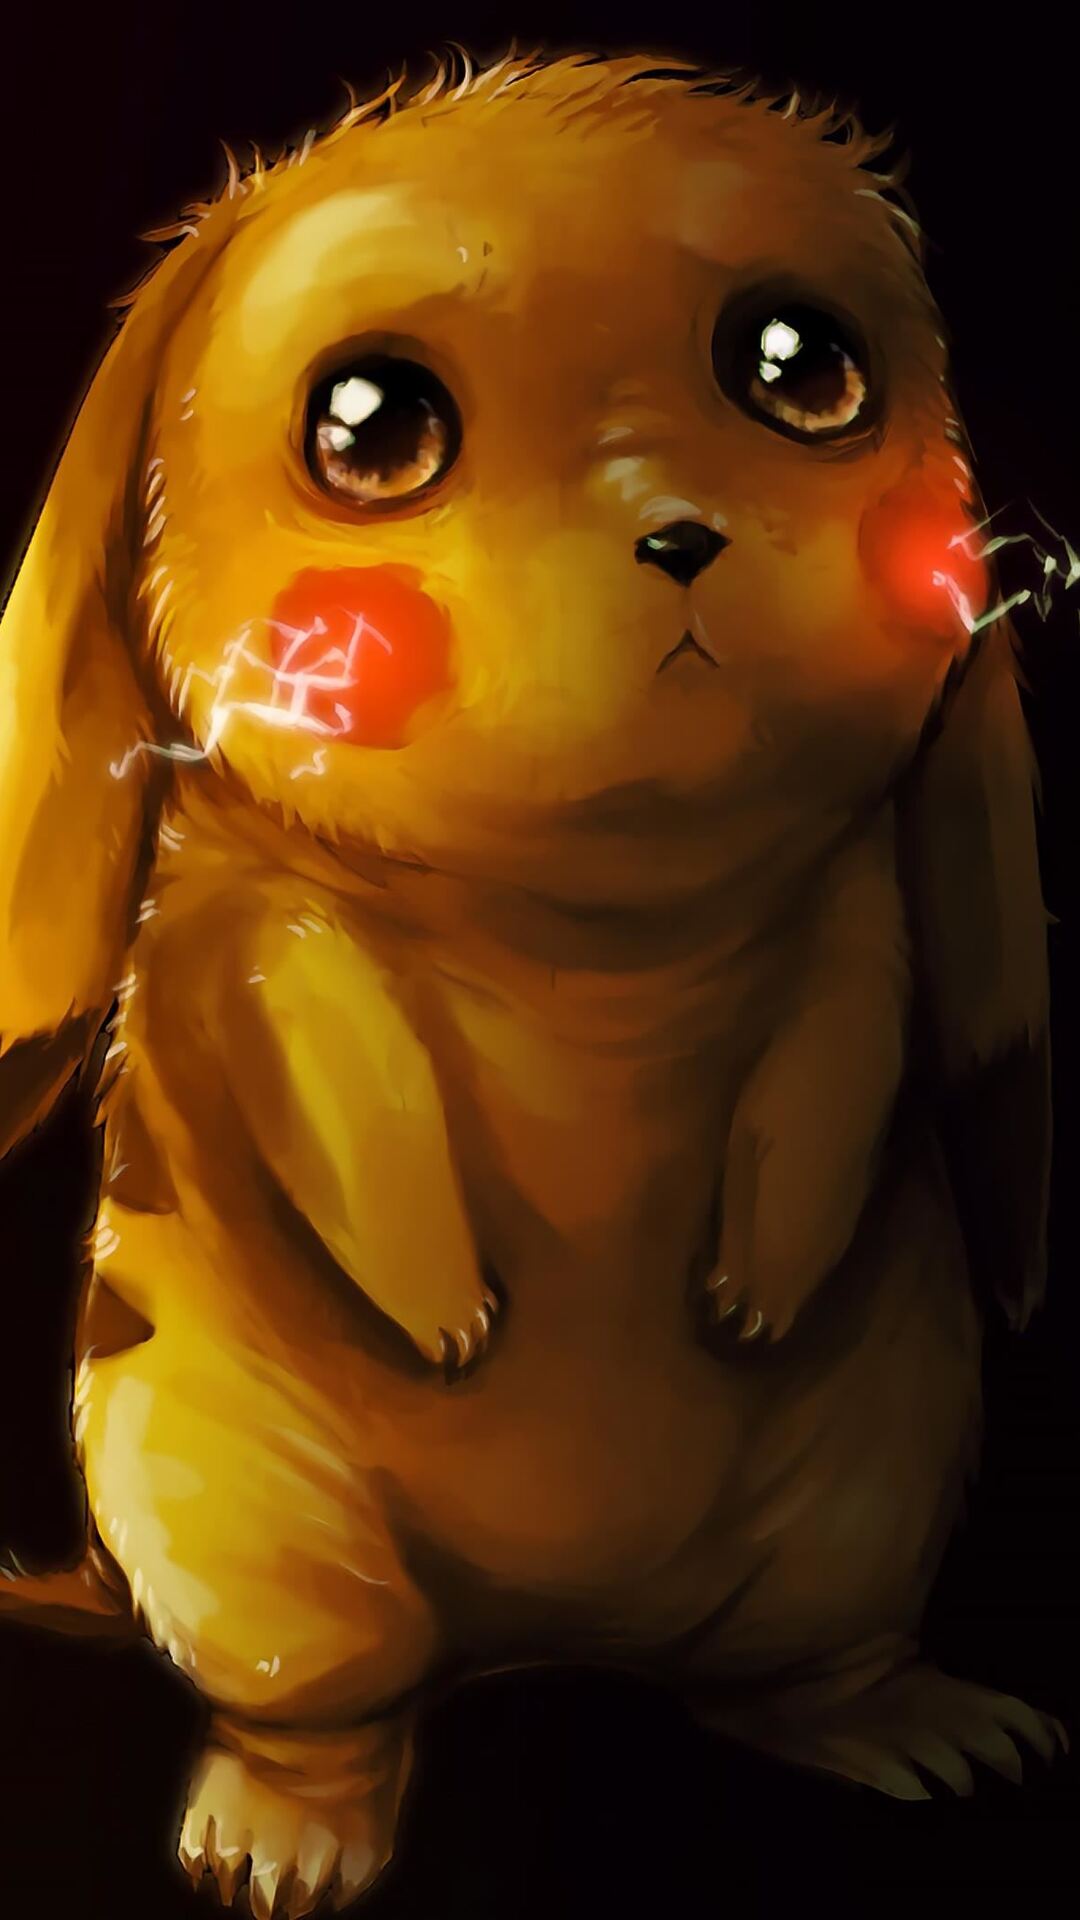 1080x1920 Pokemon Pikachu Digital Art Iphone 7,6s,6 Plus, Pixel xl ...